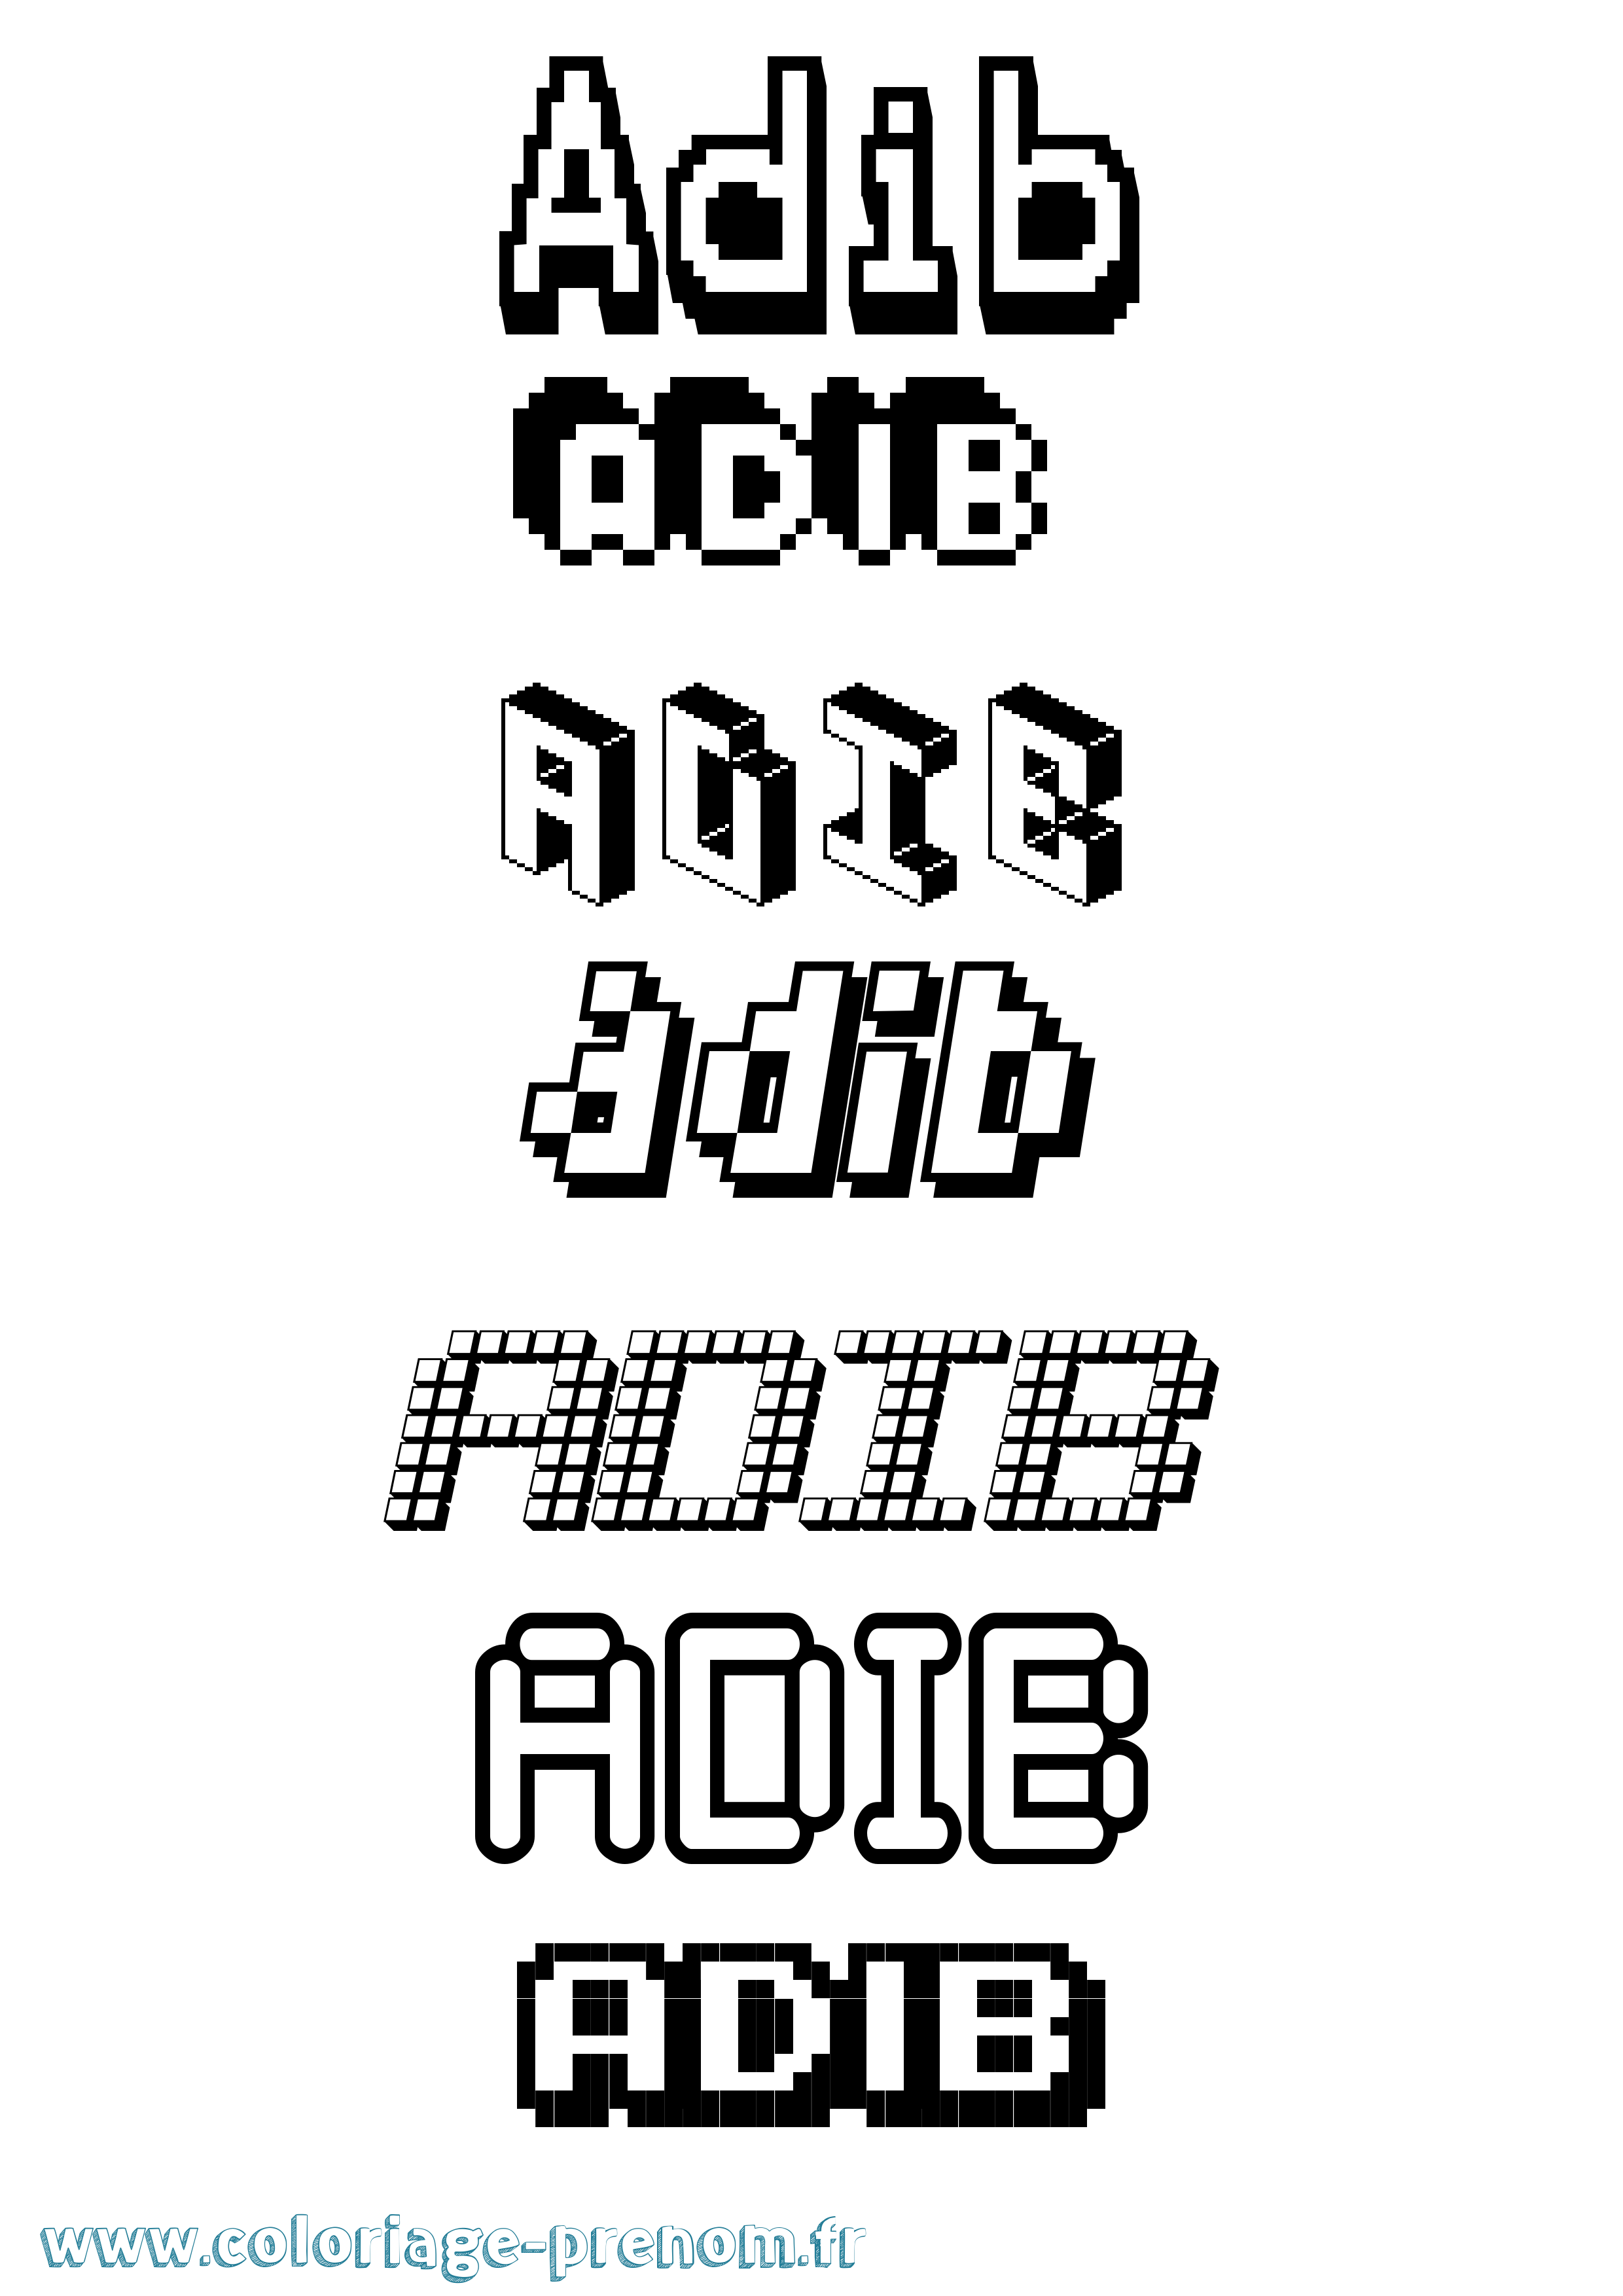 Coloriage prénom Adib Pixel